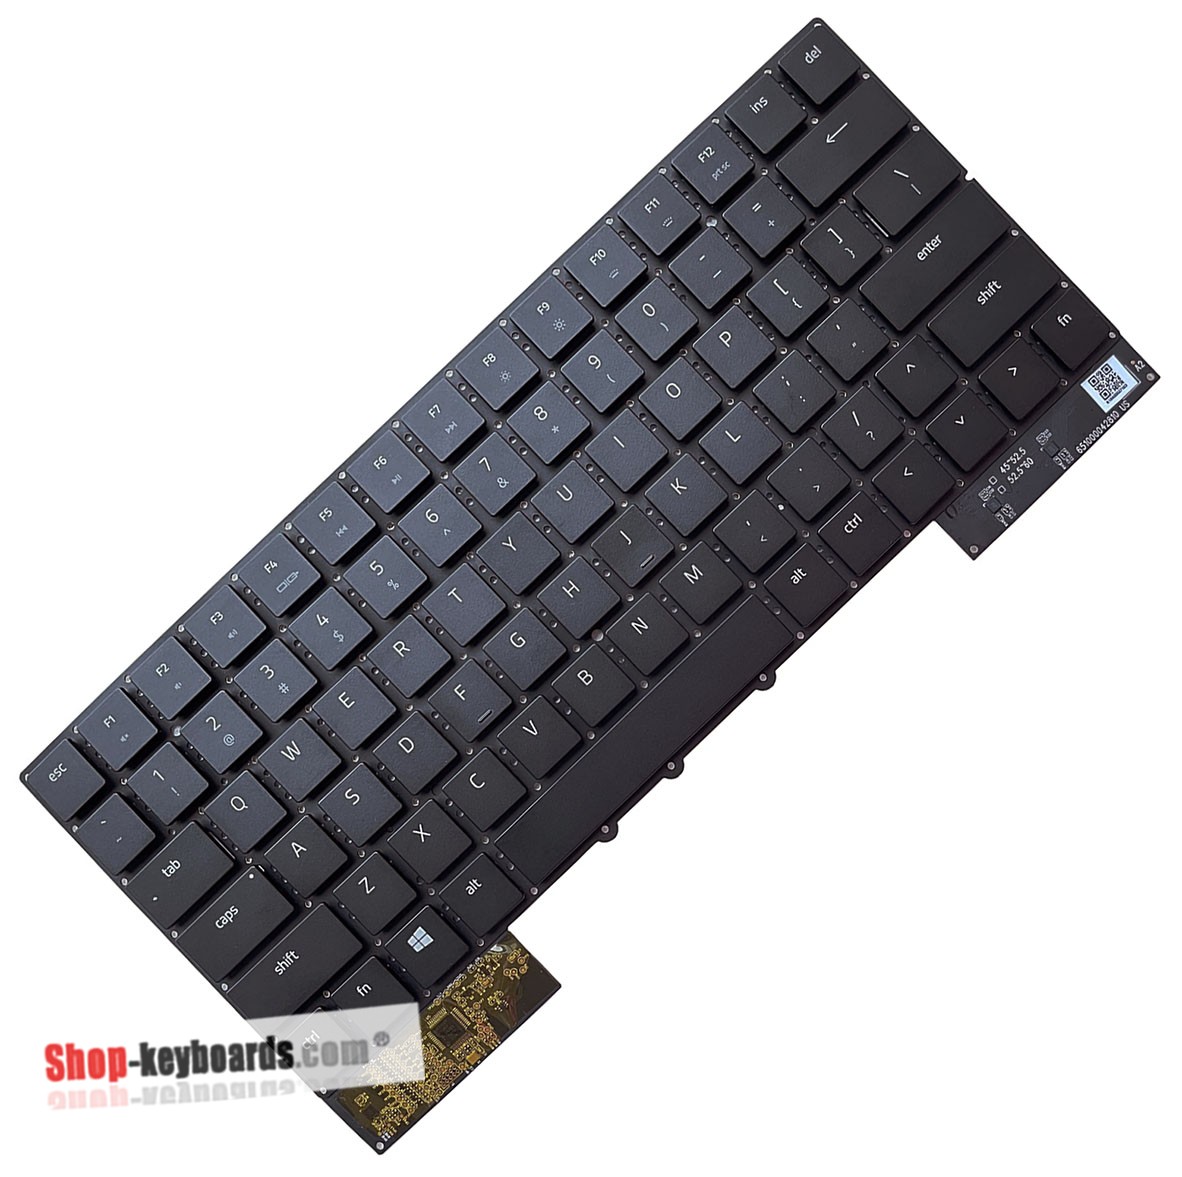 RAZER RZ09-01682E22 Keyboard replacement